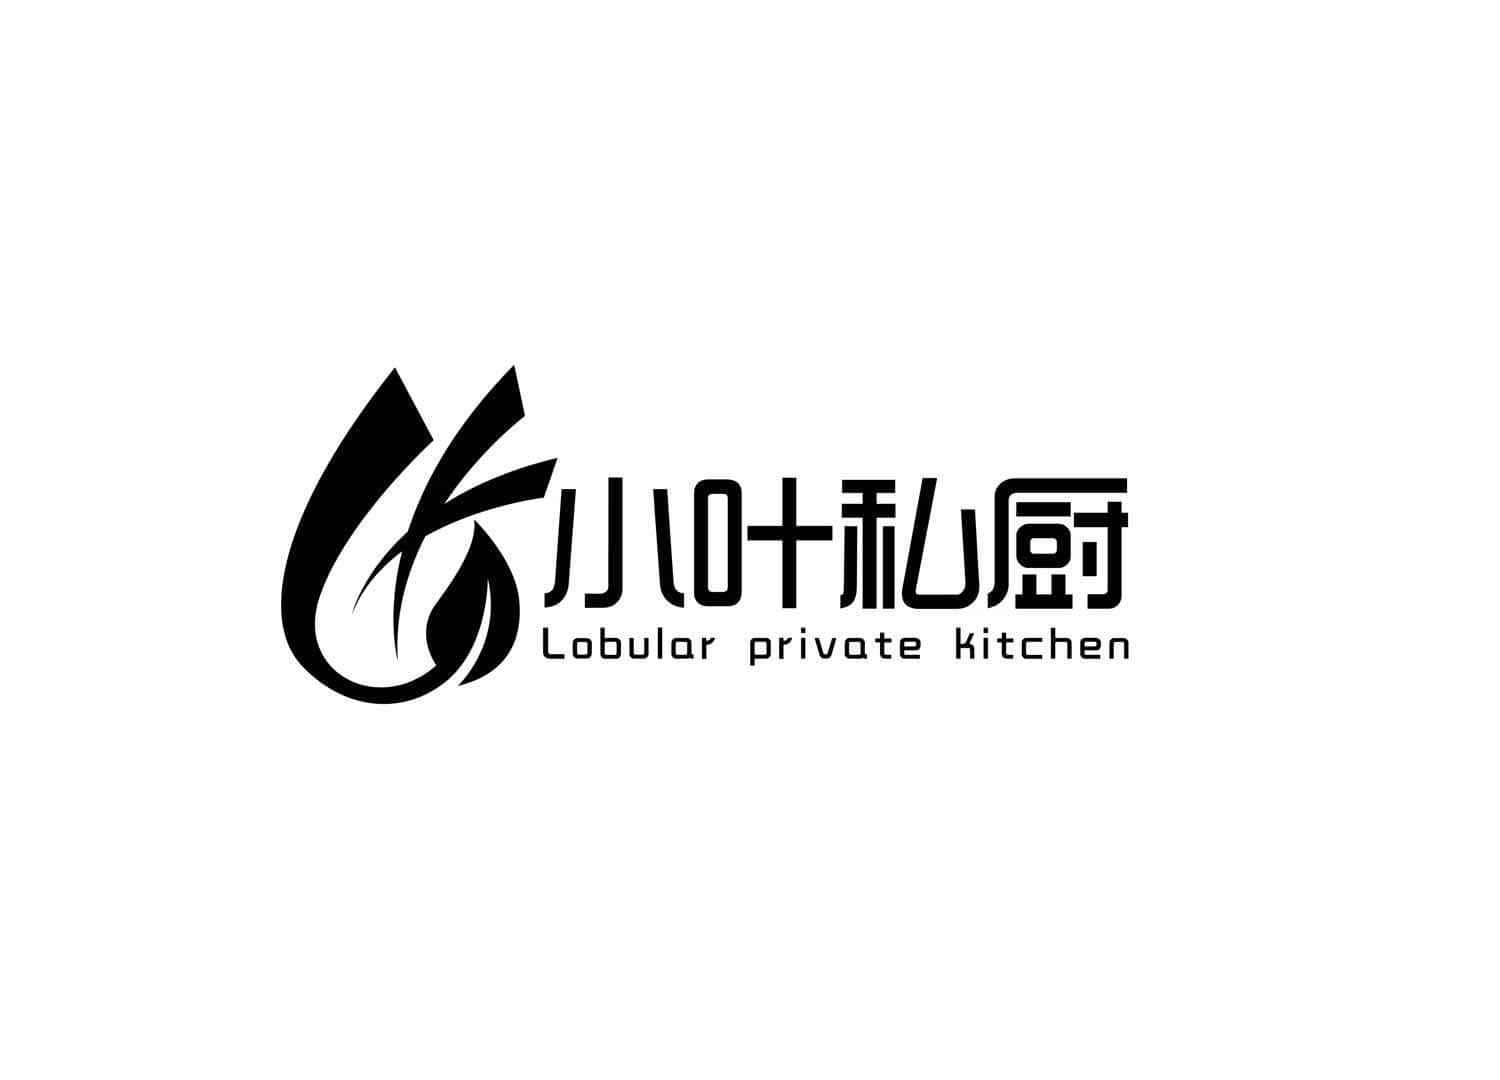 小叶私厨 lobular private kitchen